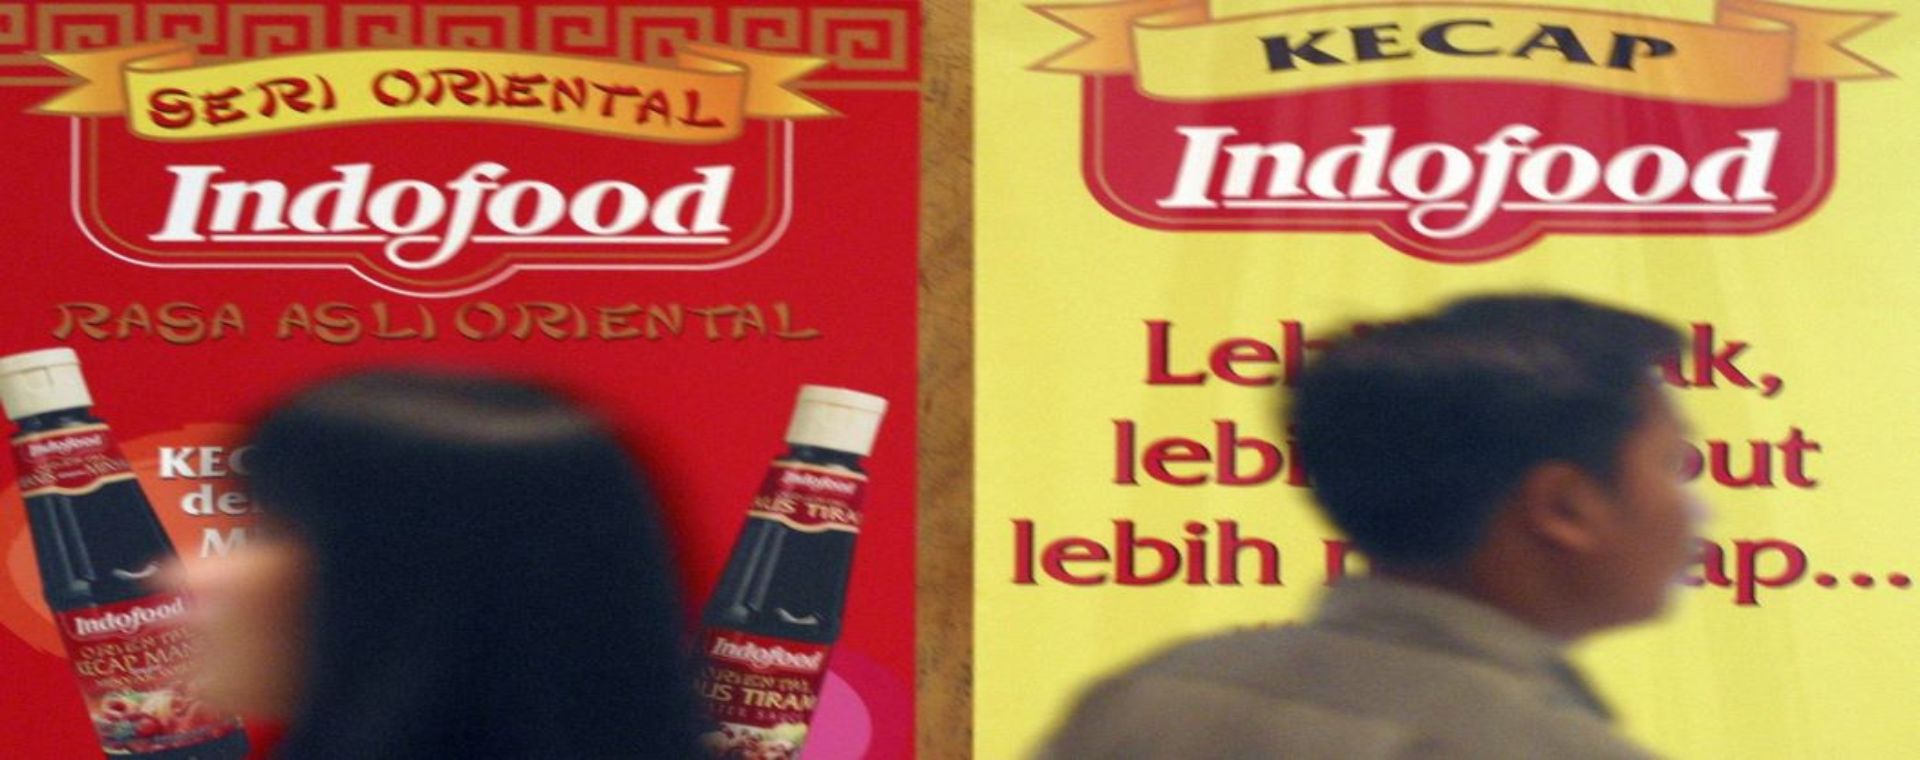  Historia Bisnis : Kala Indofood (INDF) Diminta Tunda Ekspansi